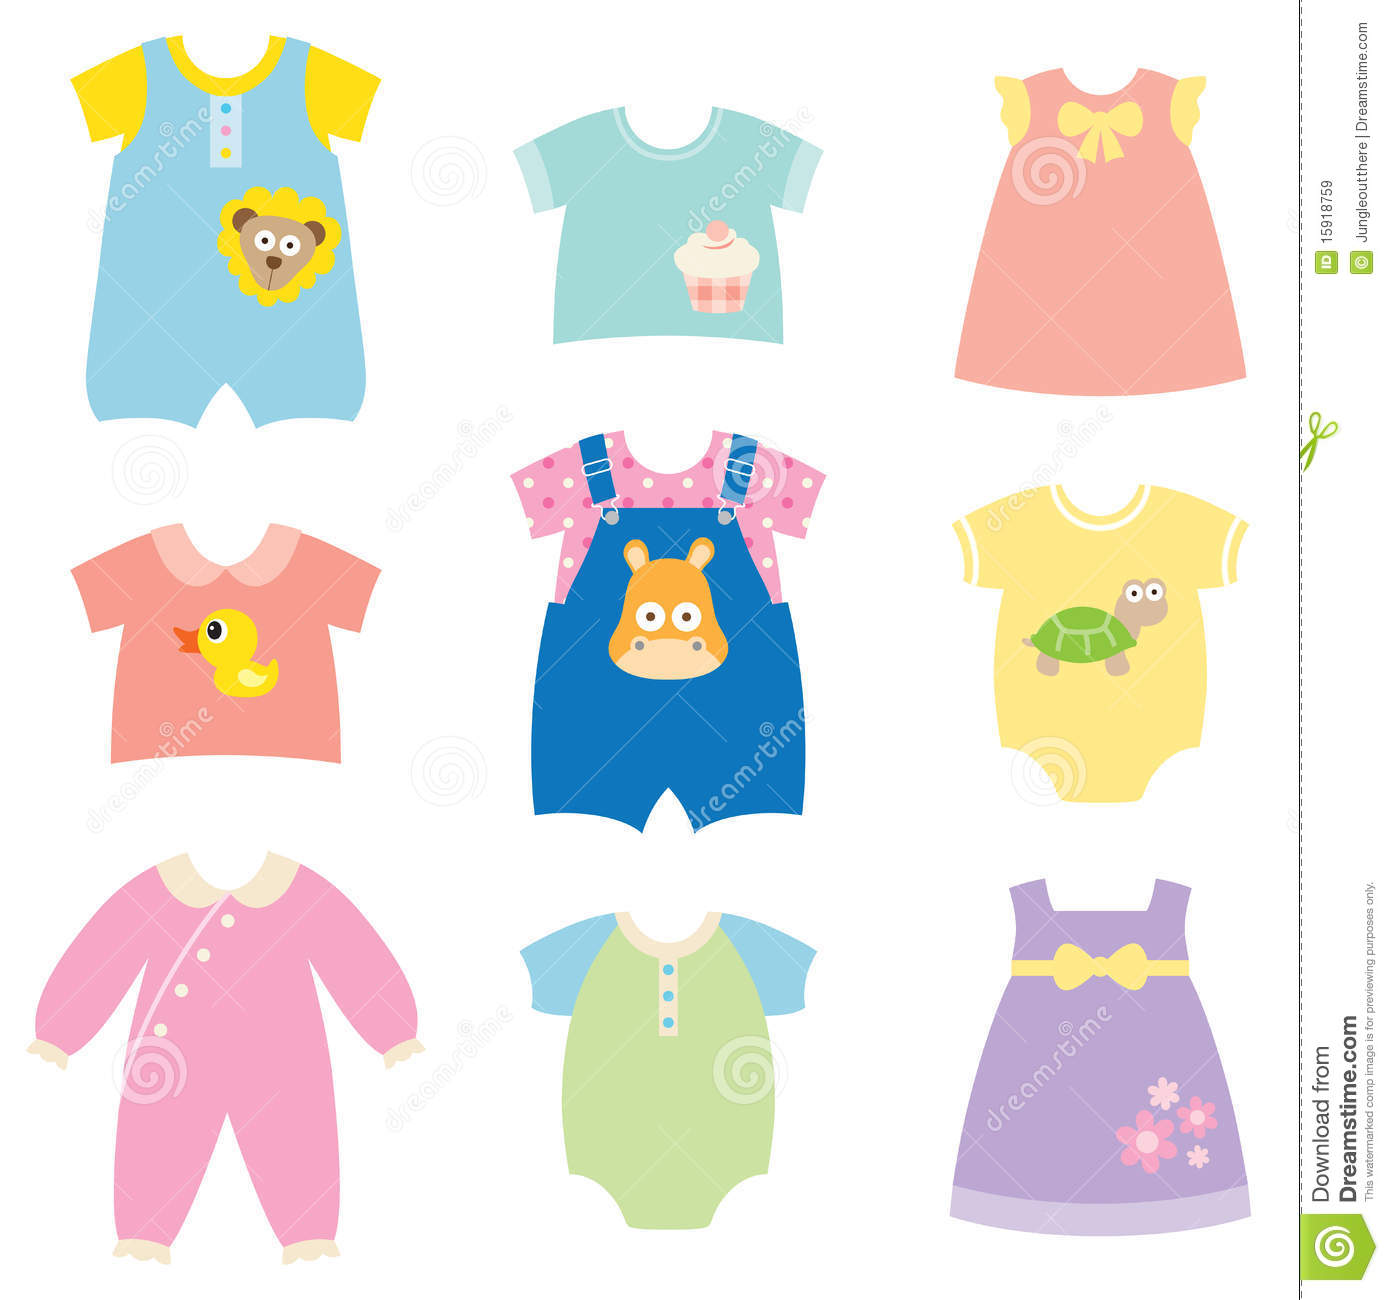 Baby Clothes Clip Art - Baby Clothes Clipart